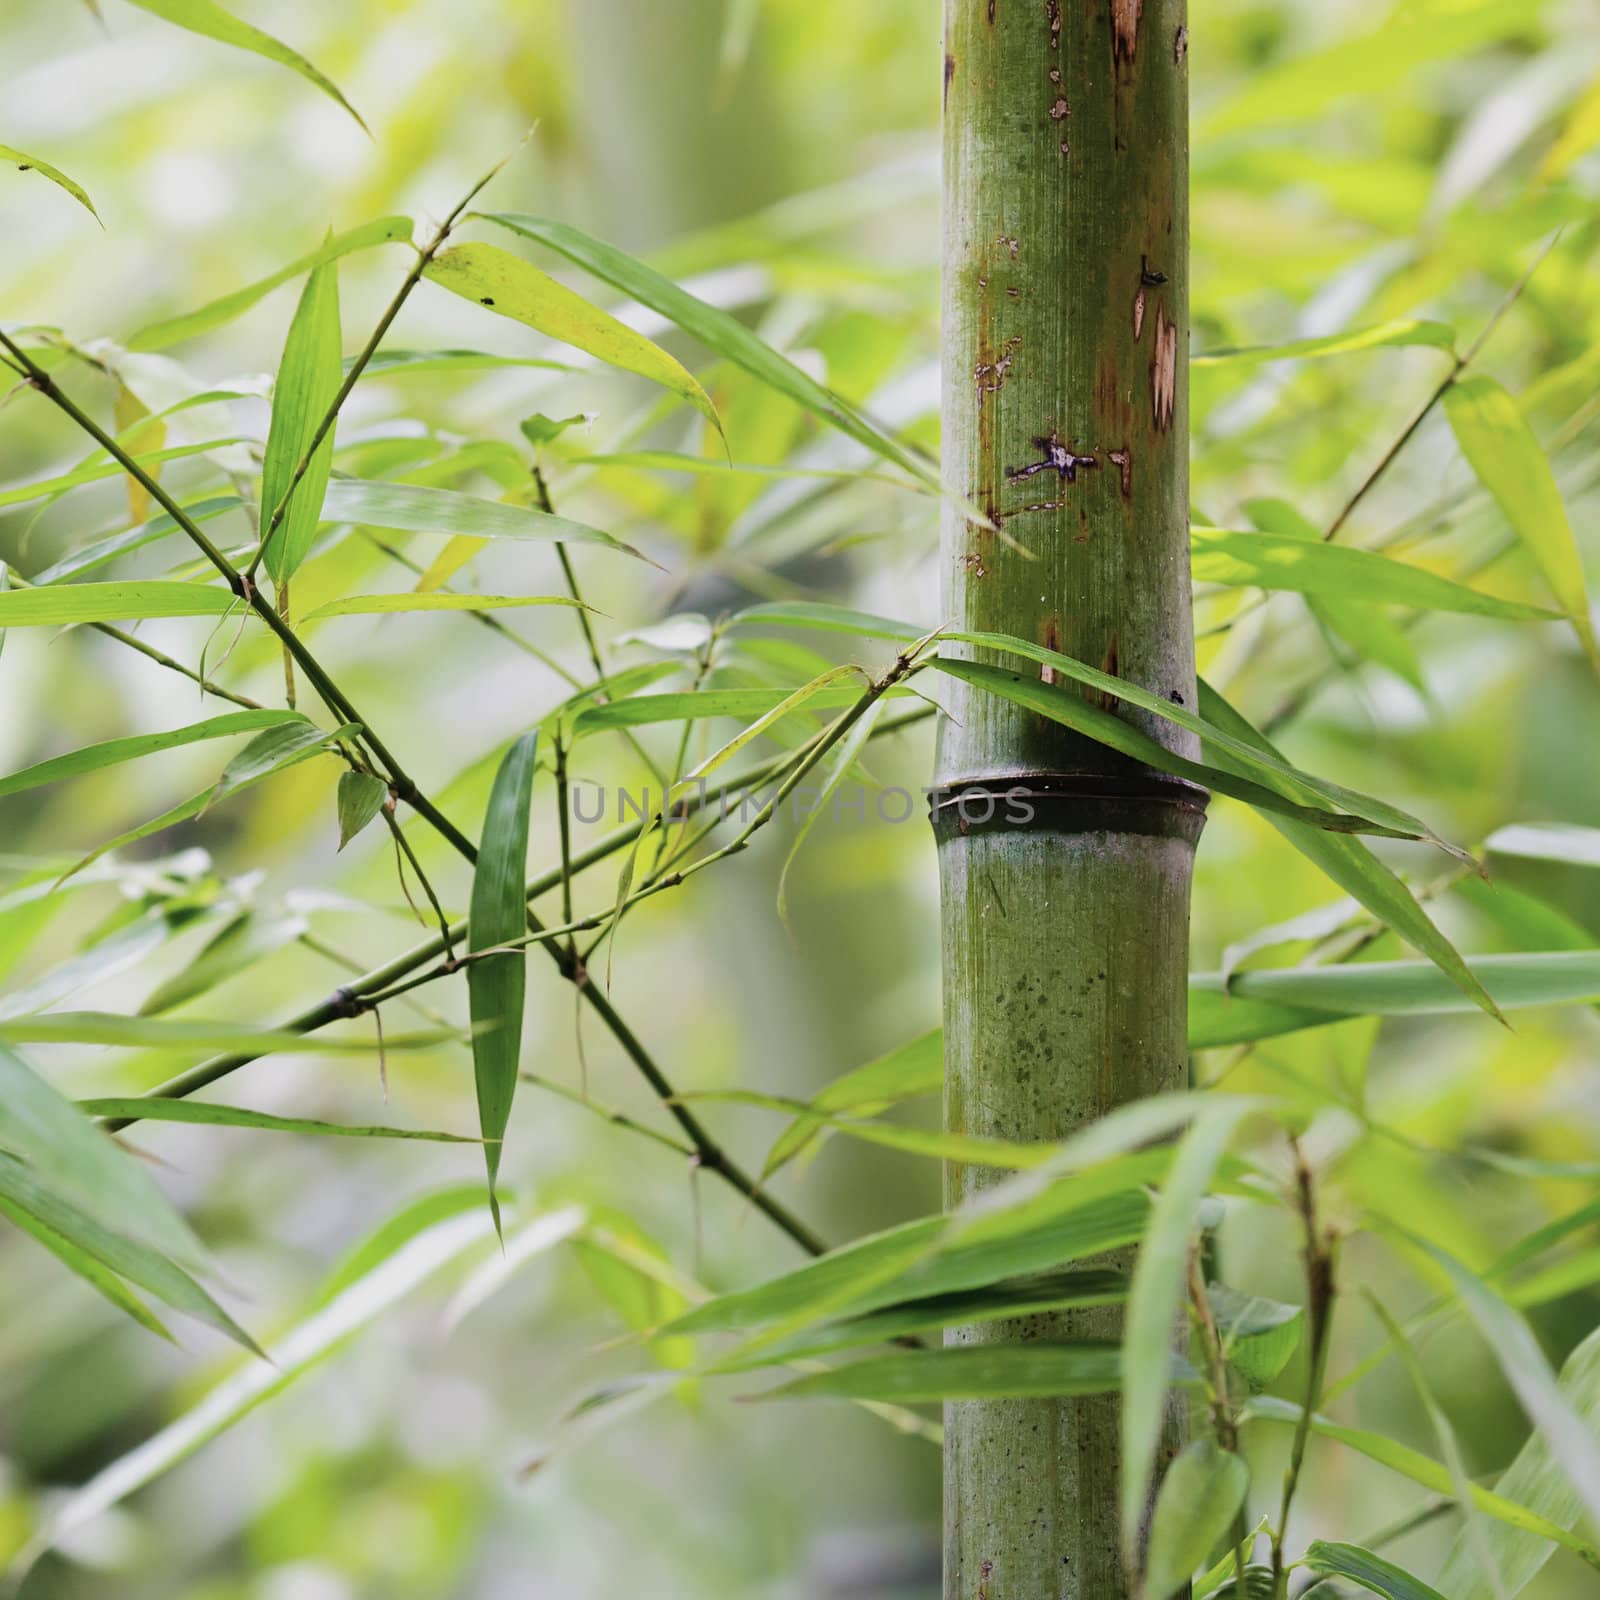 bamboo groves